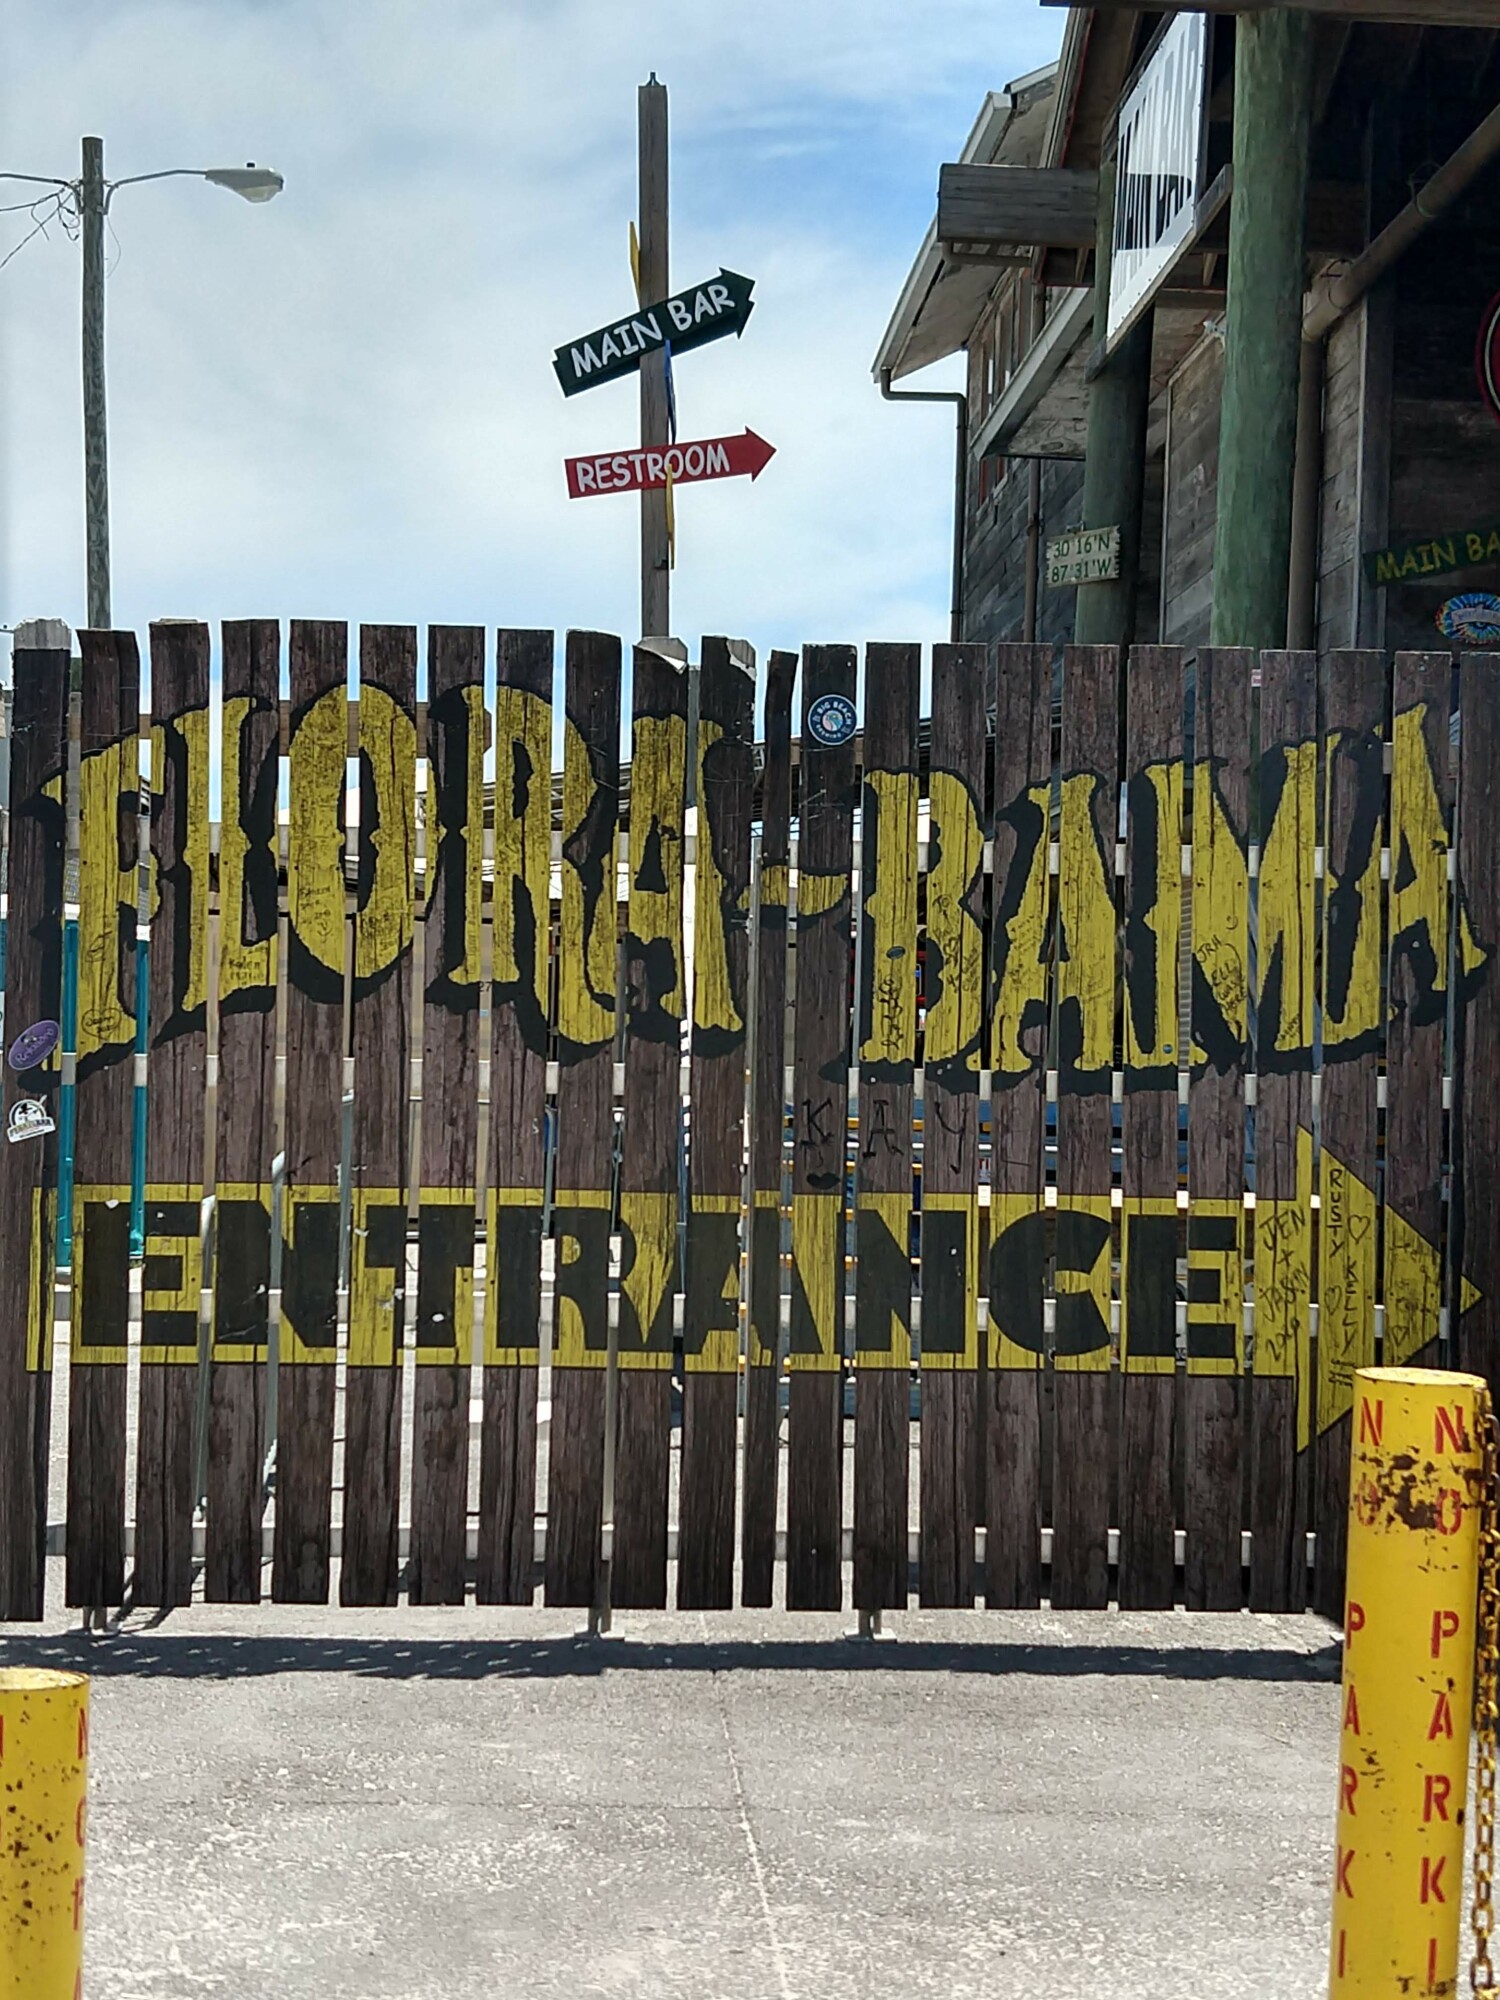 The famous Flor-Bama Restaurant